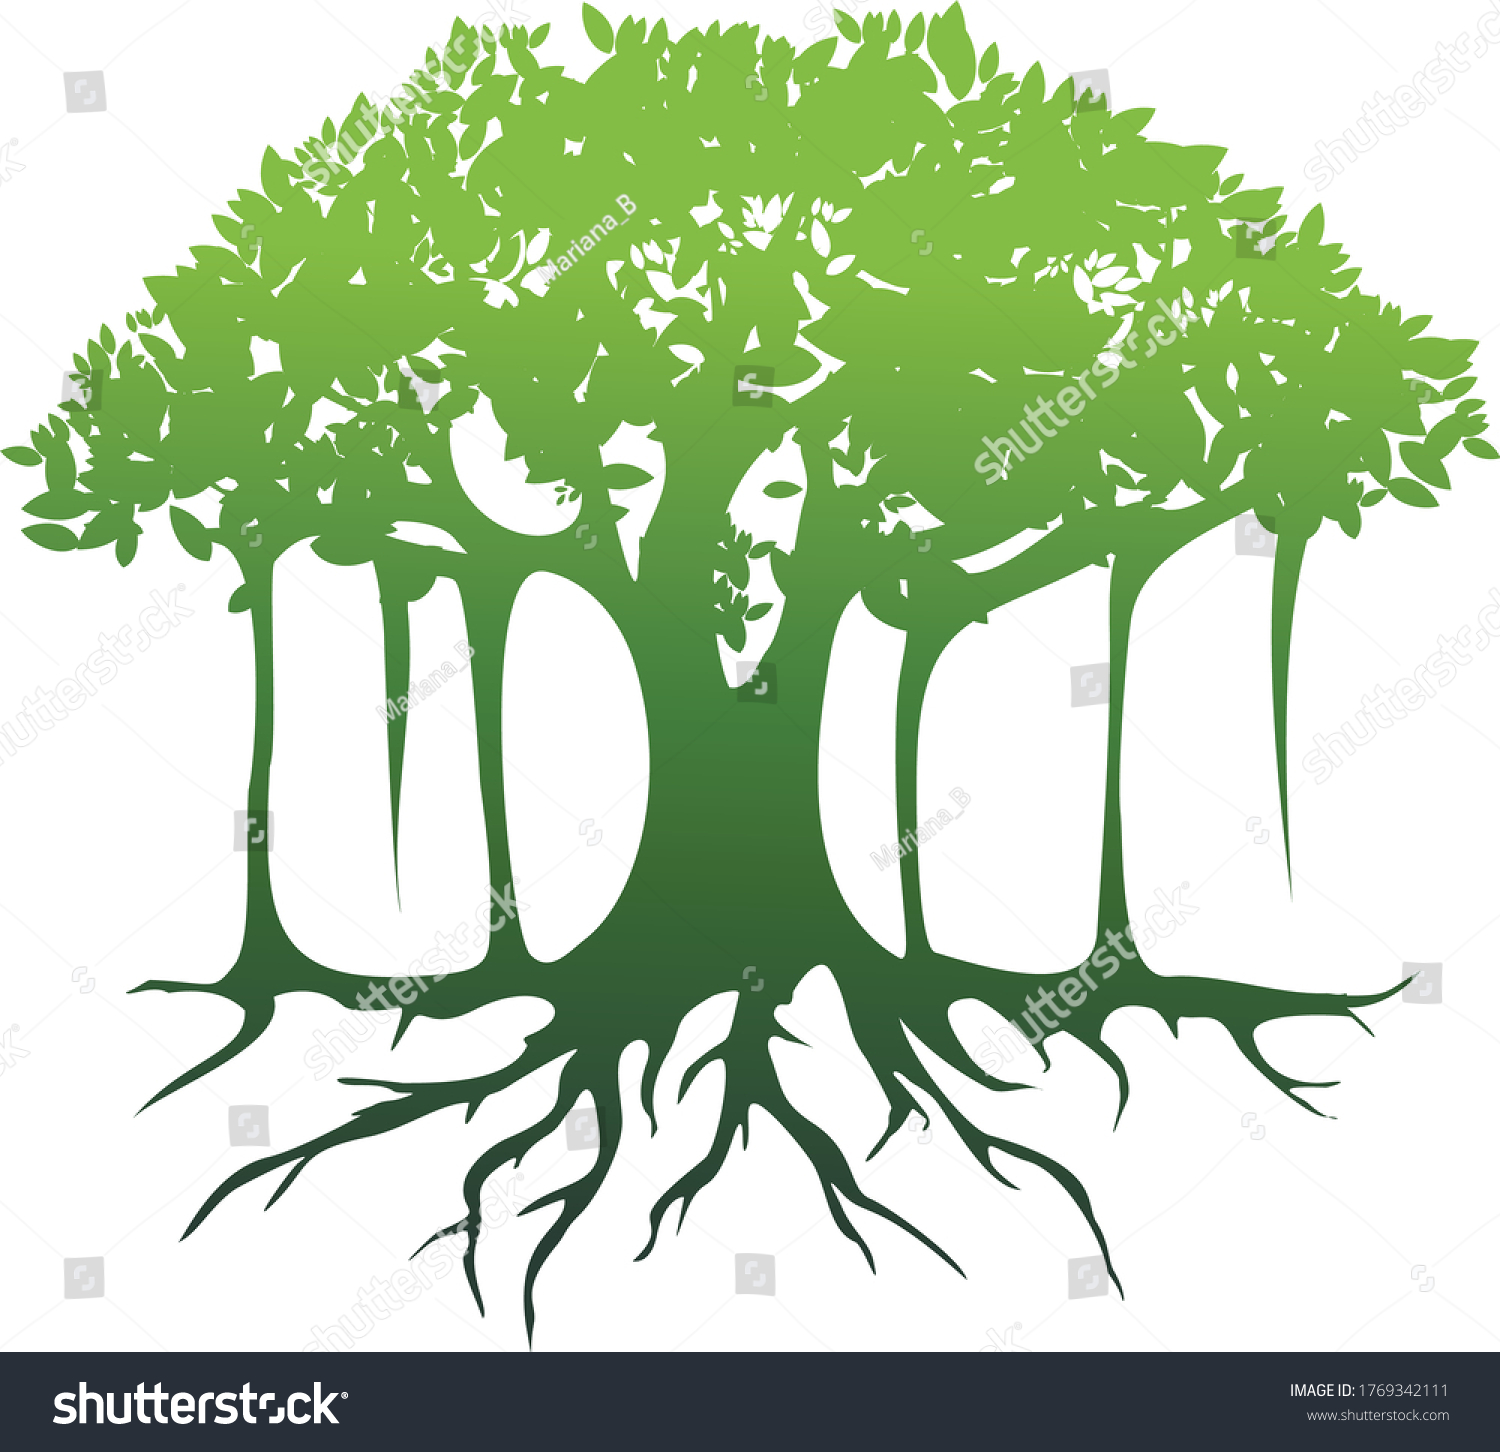 SVG of illustration of a  banyan tree svg